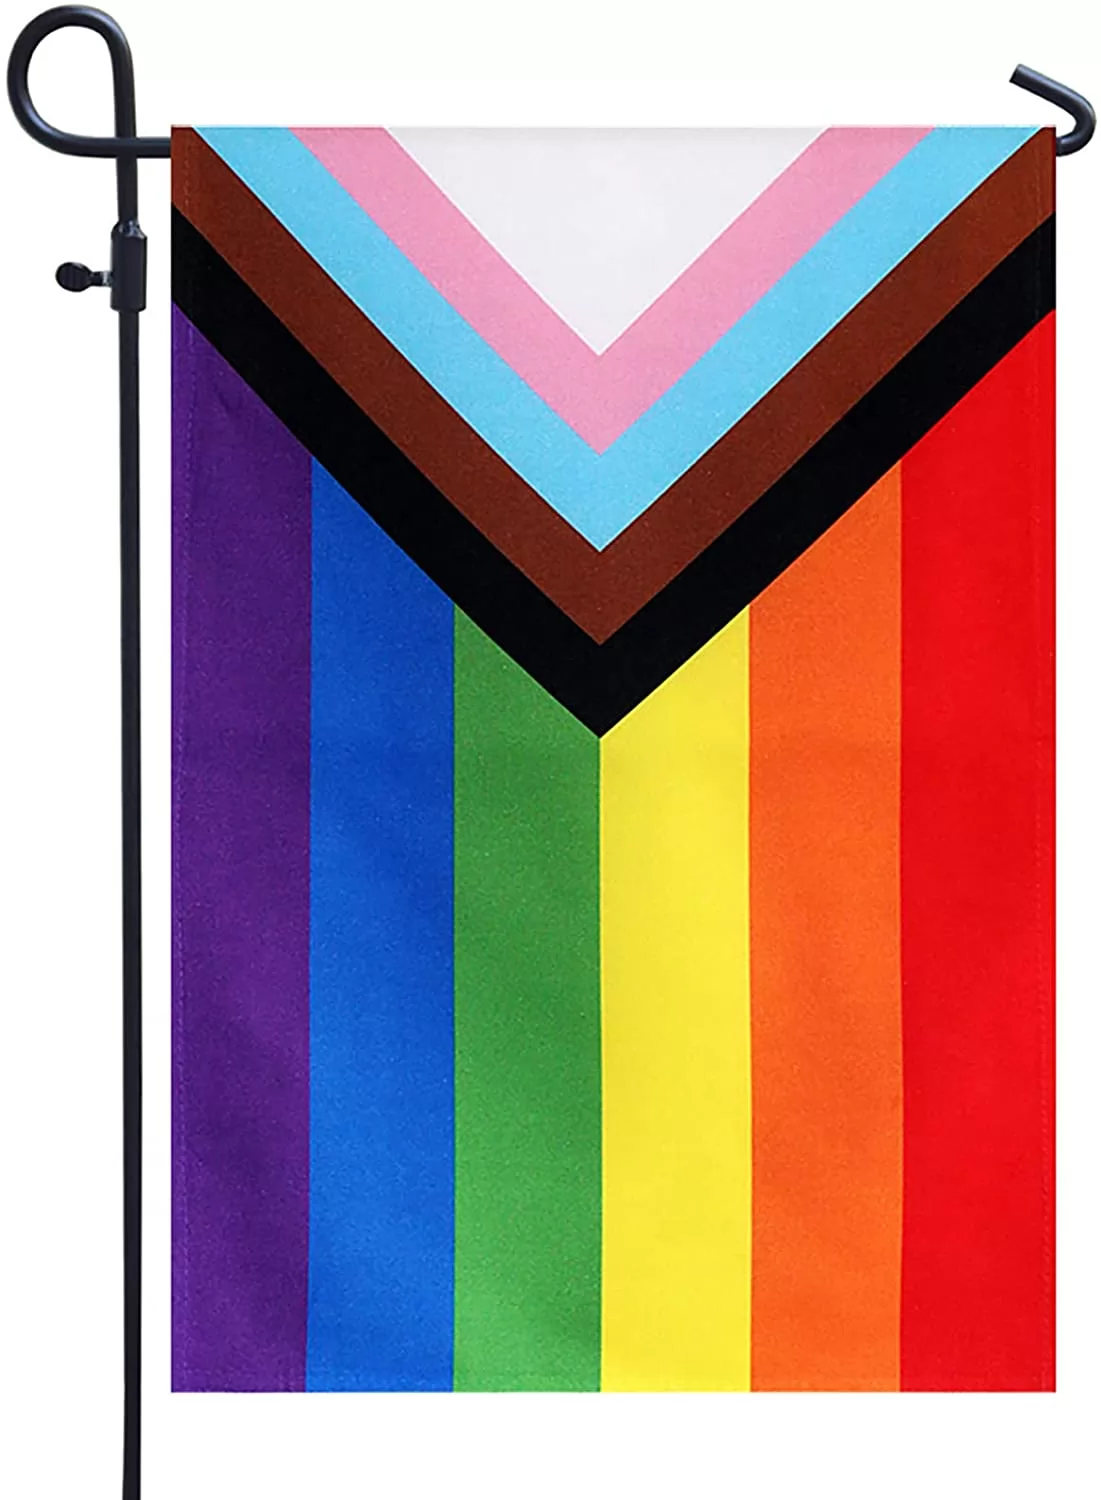 Homissor Progress Pride Rainbow Garden Flag- LGBT Community Gay Pride Lesbian Transgender Flags Banner UV Fade Resistant for Indoor Outdoor 12x18 Inch